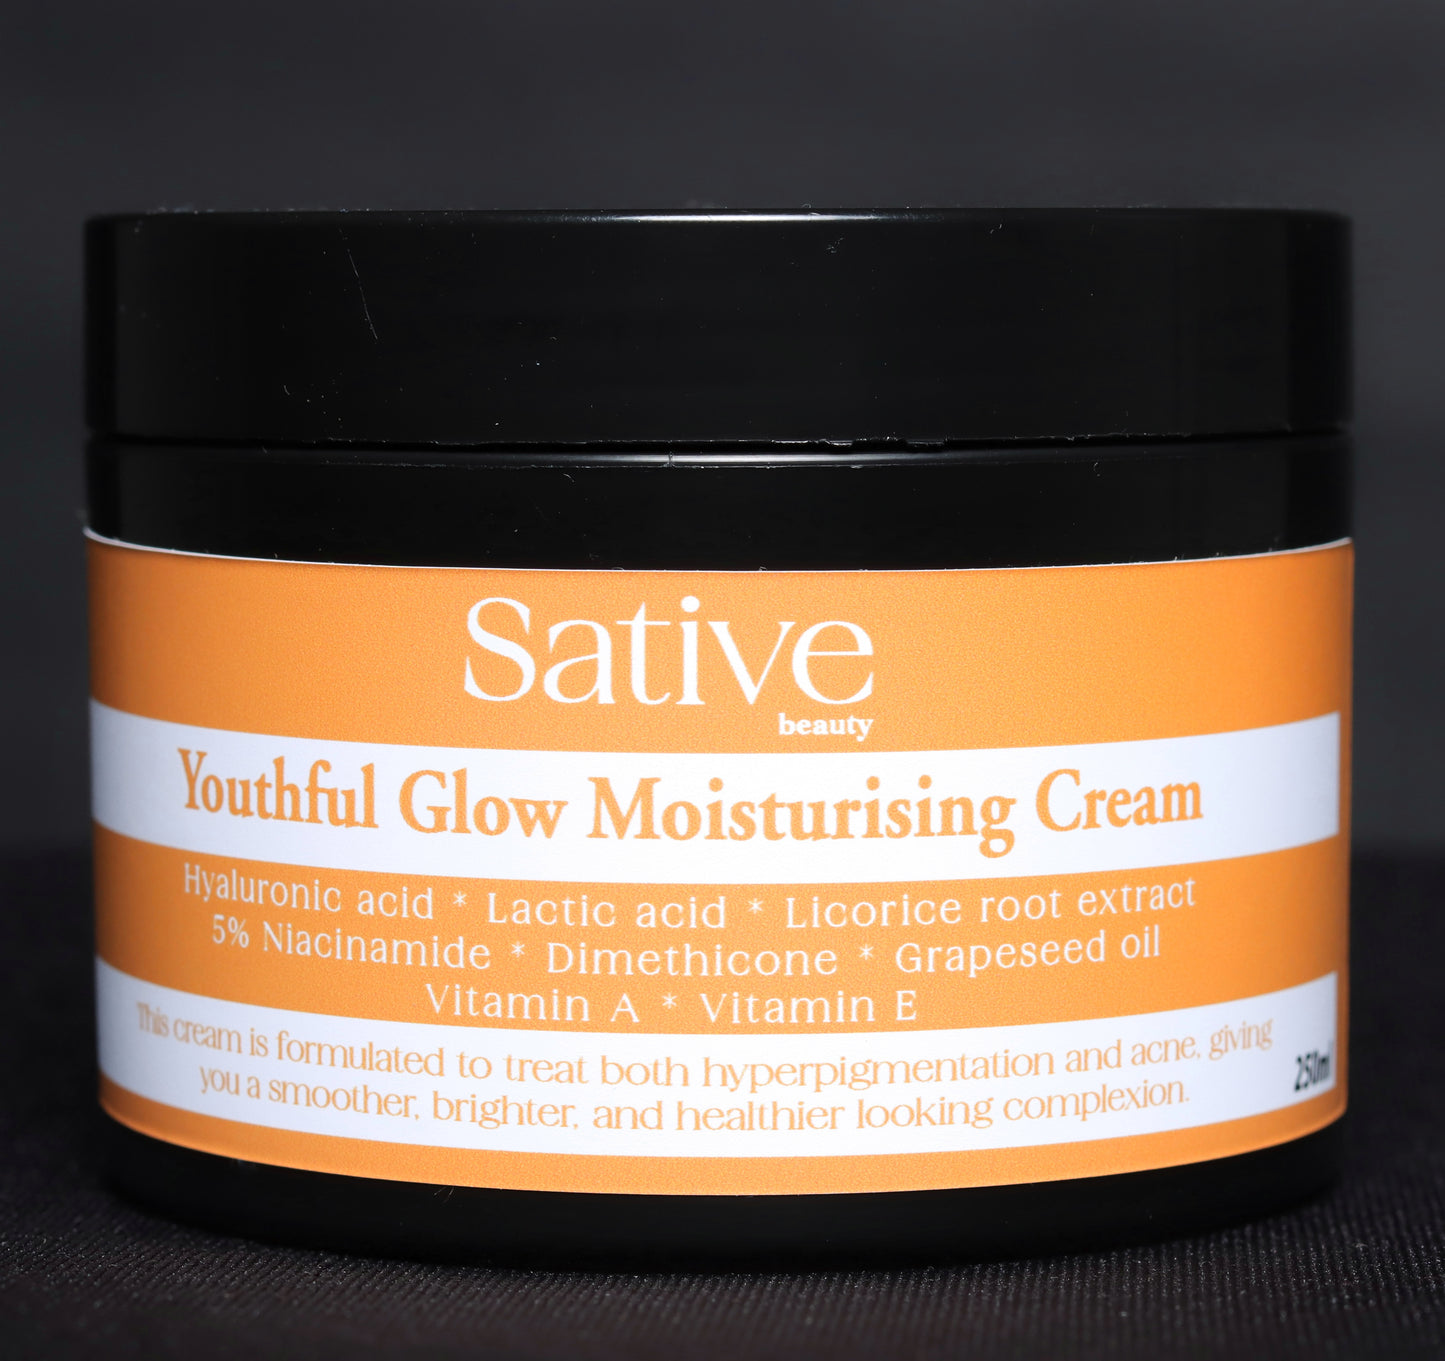 Youthful Glow Moisturising Cream